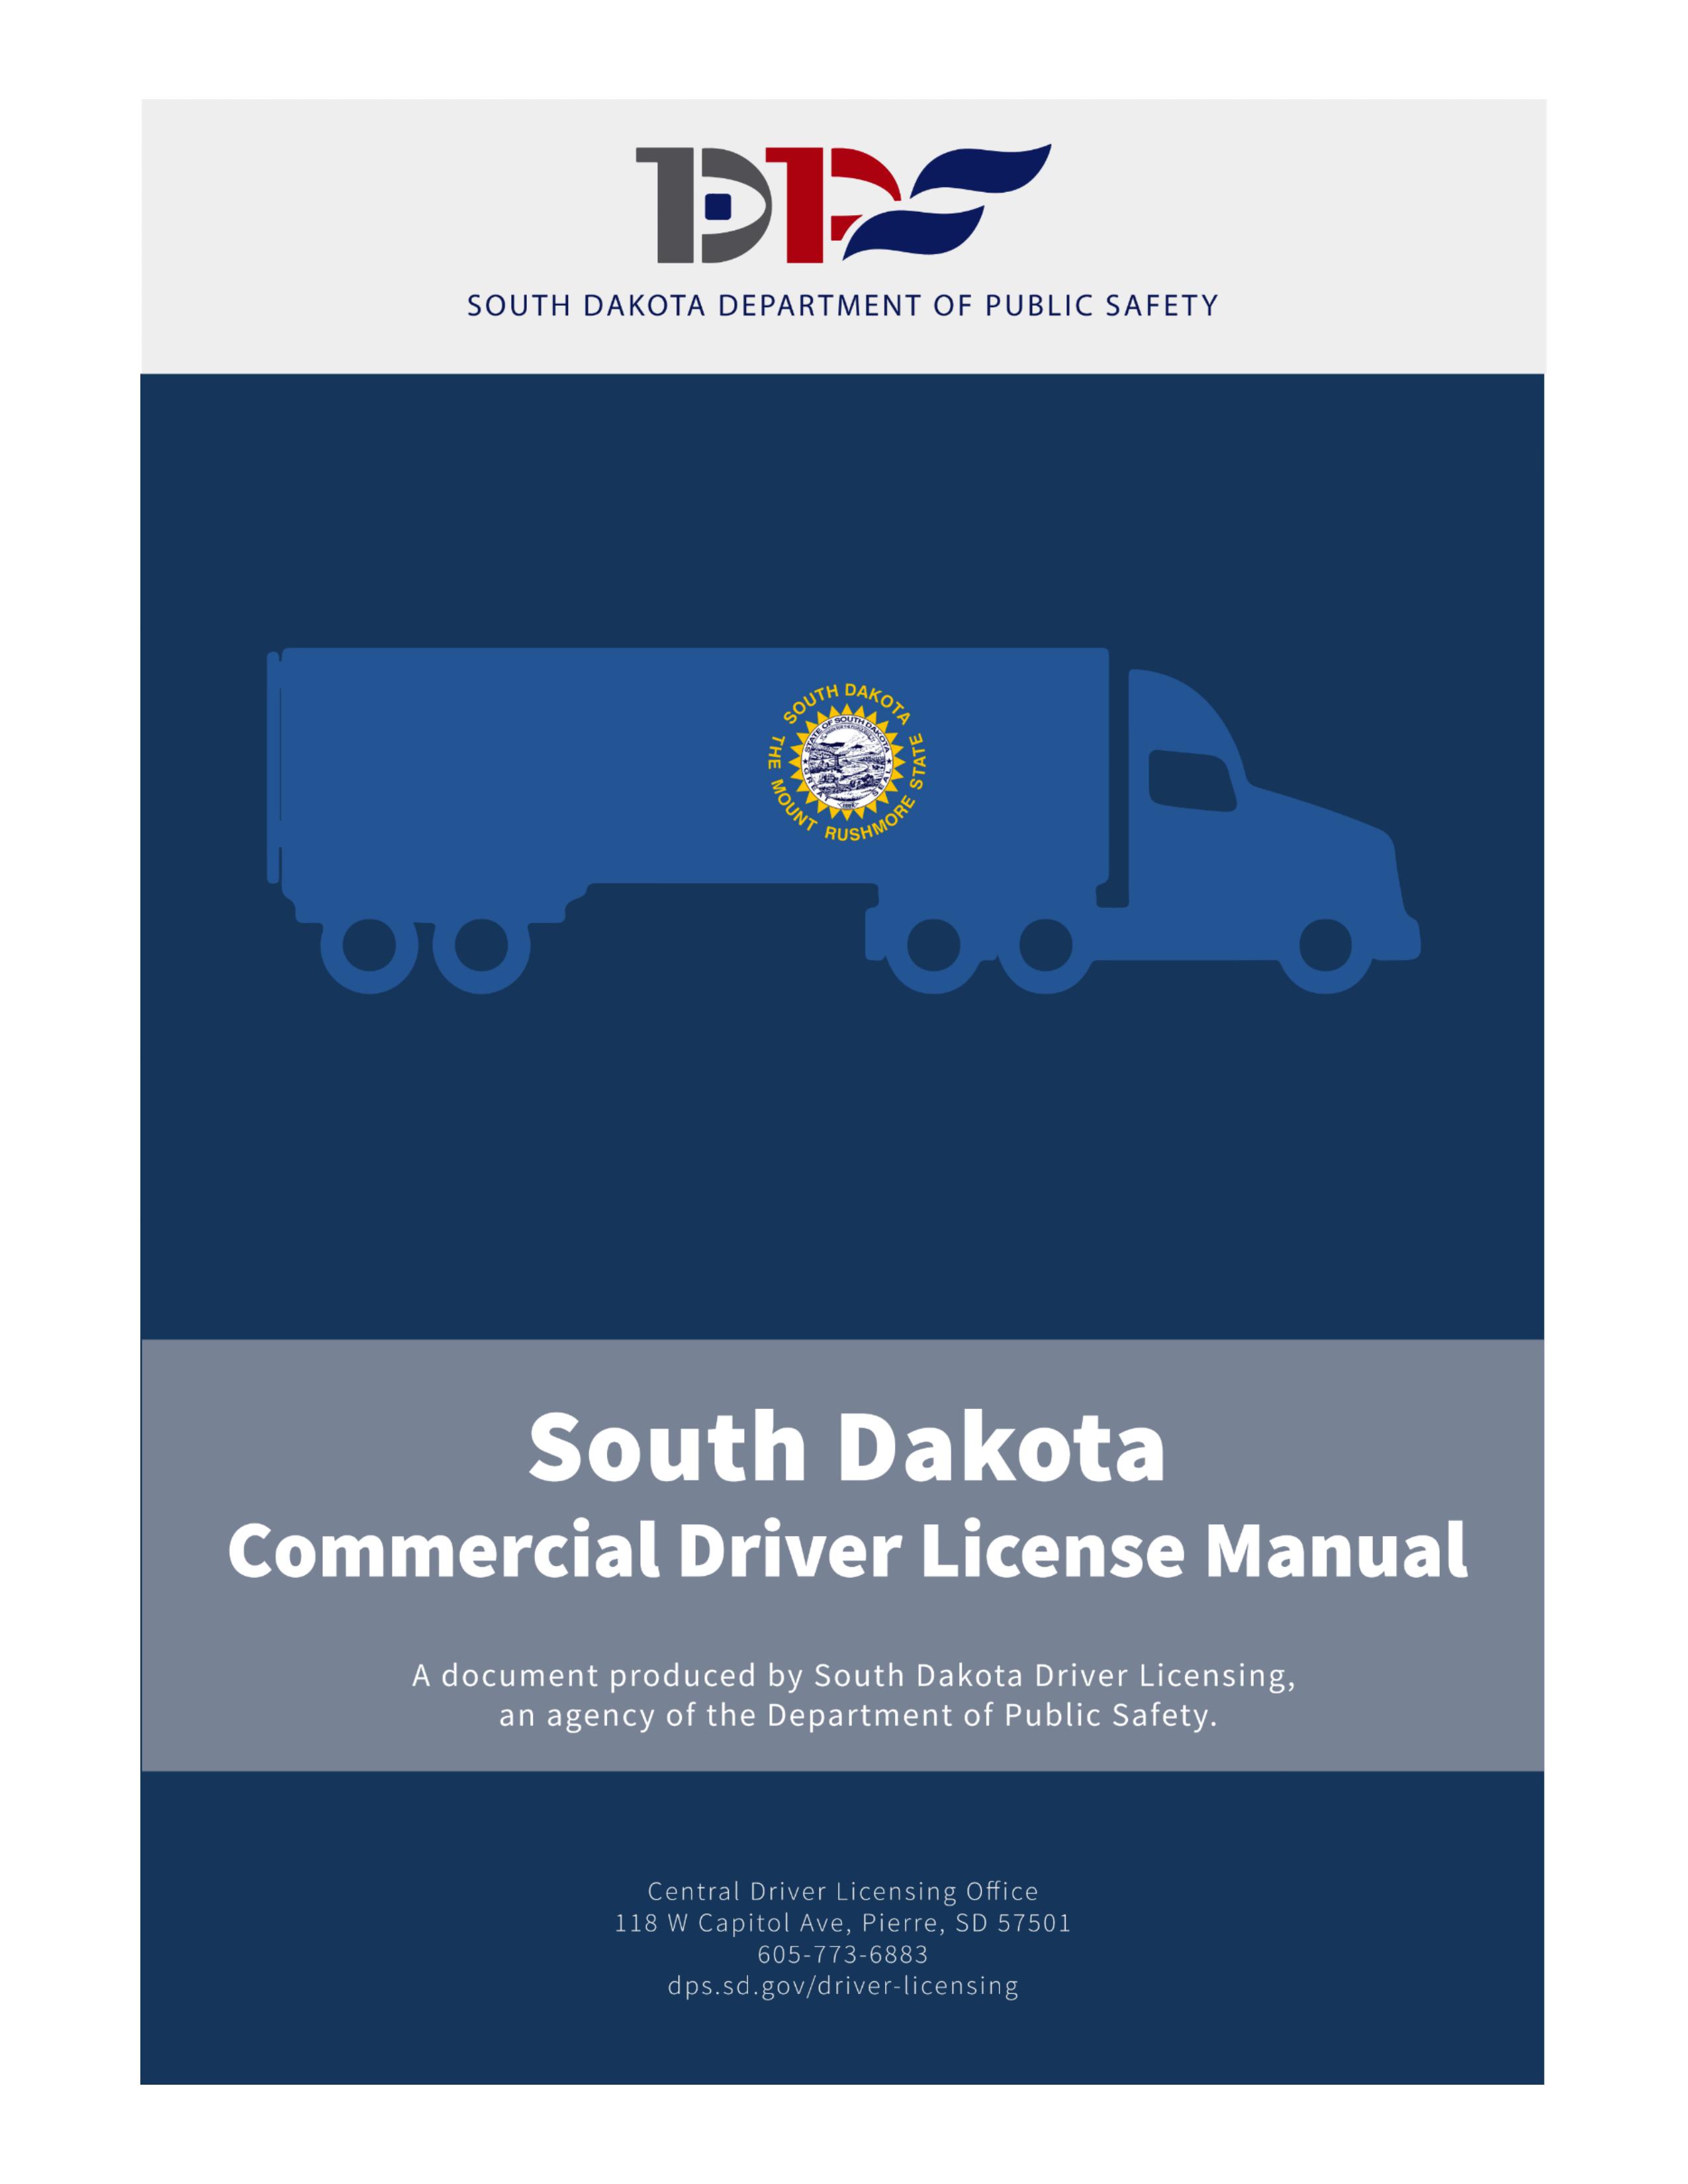 South Dakota's CDL Manual